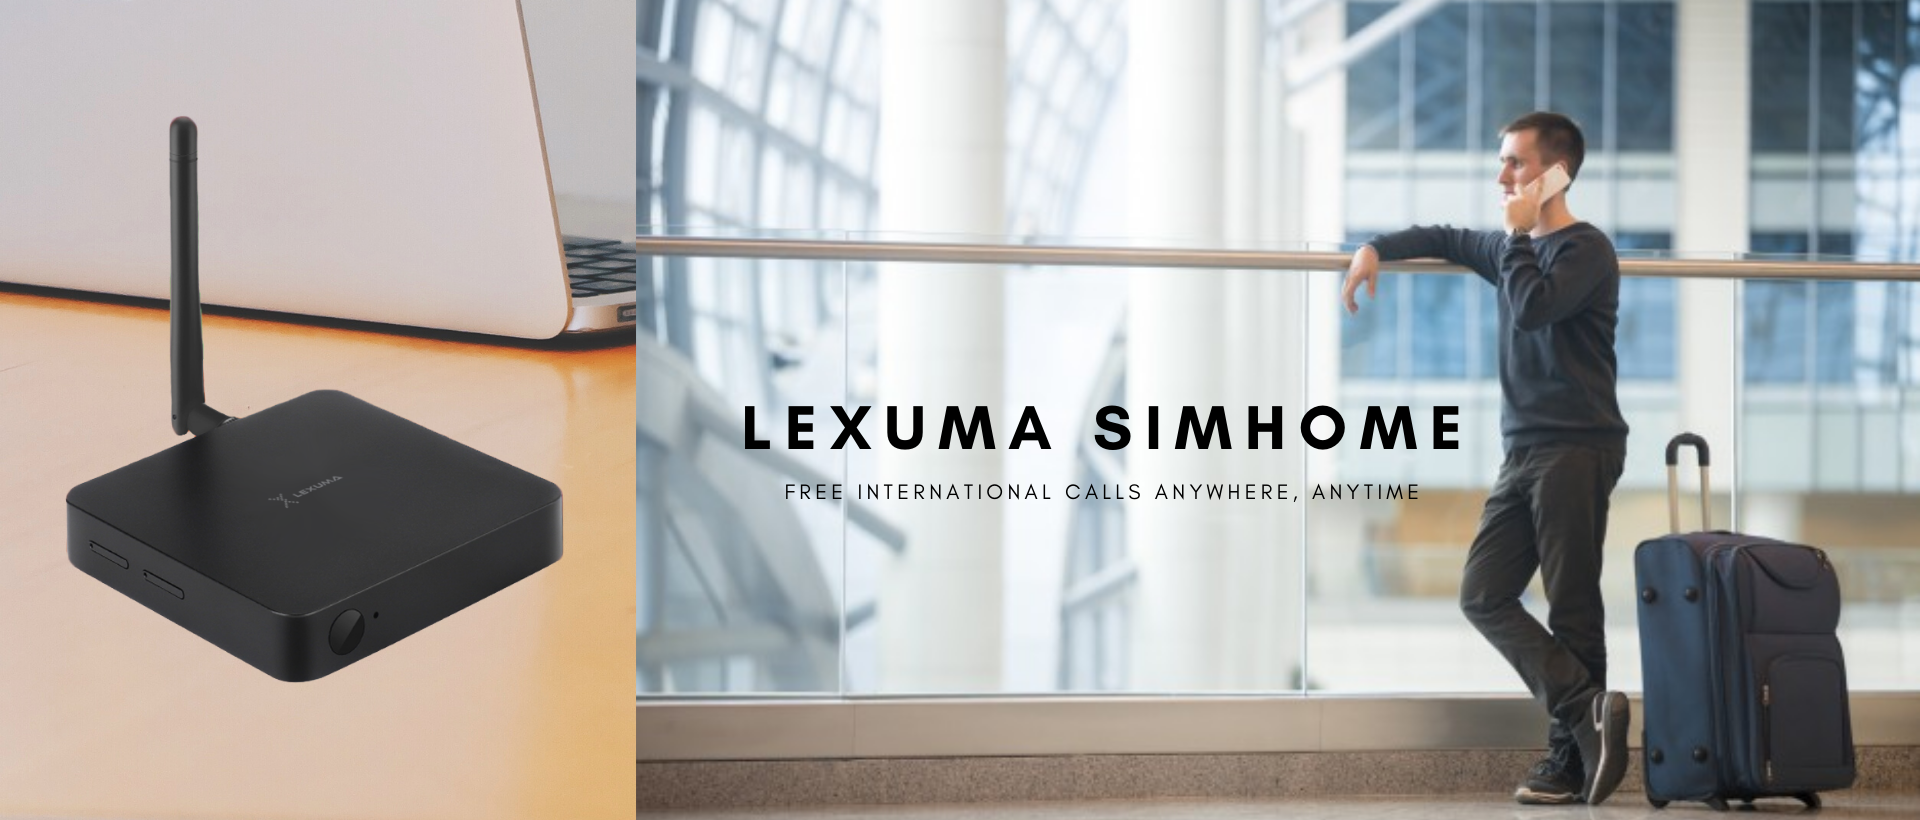 lexuma-simhome-dual-sim-standby-roaming-gateway-adapter-router-banner-travel-free-internaional-call